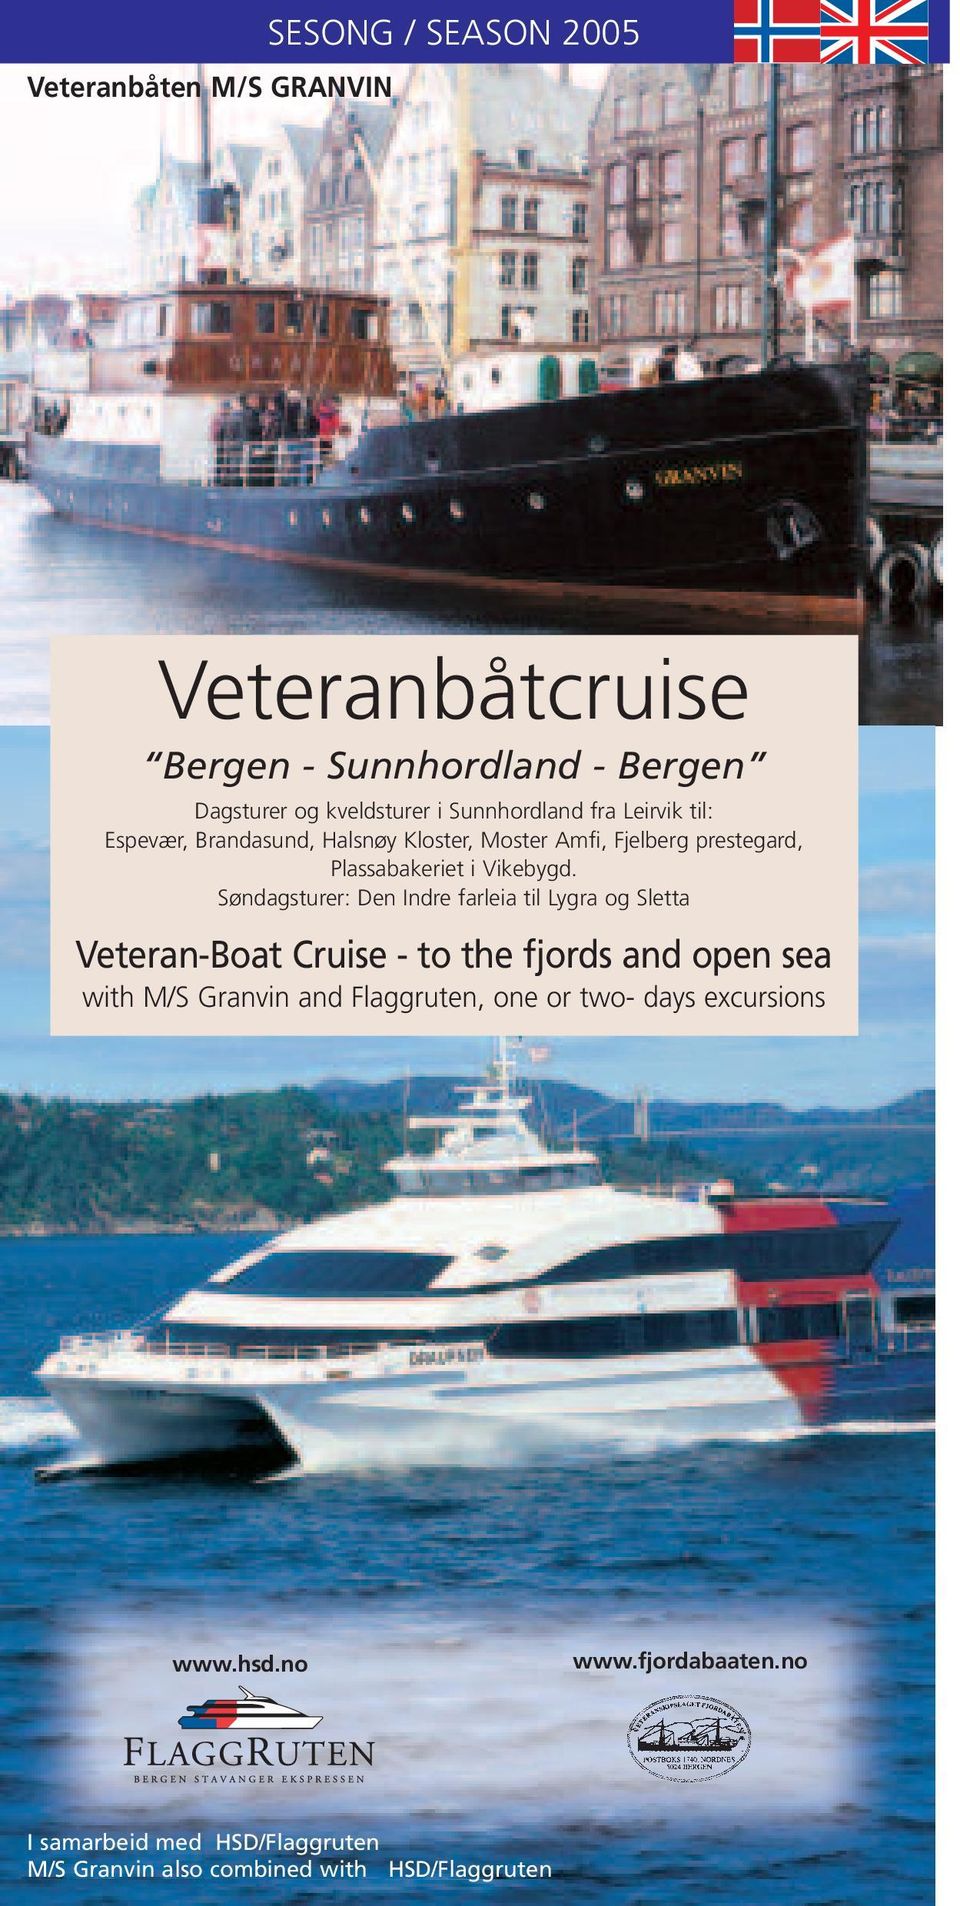 Søndagsturer: Den Indre farleia til Lygra og Sletta Veteran-Boat Cruise - to the fjords and open sea with M/S Granvin and